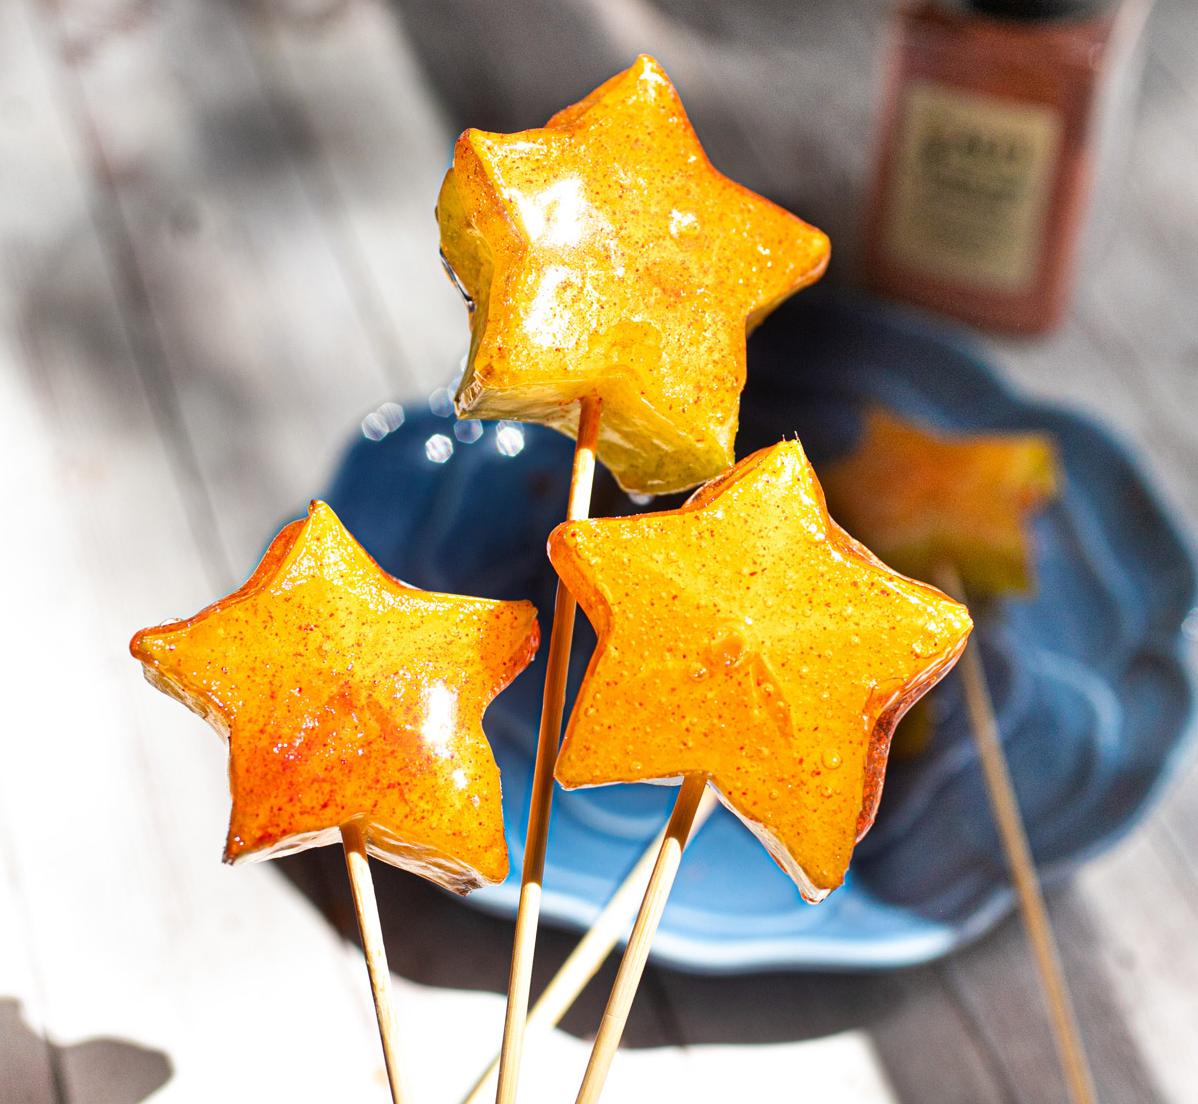  Bite-sized stars bursting with flavor